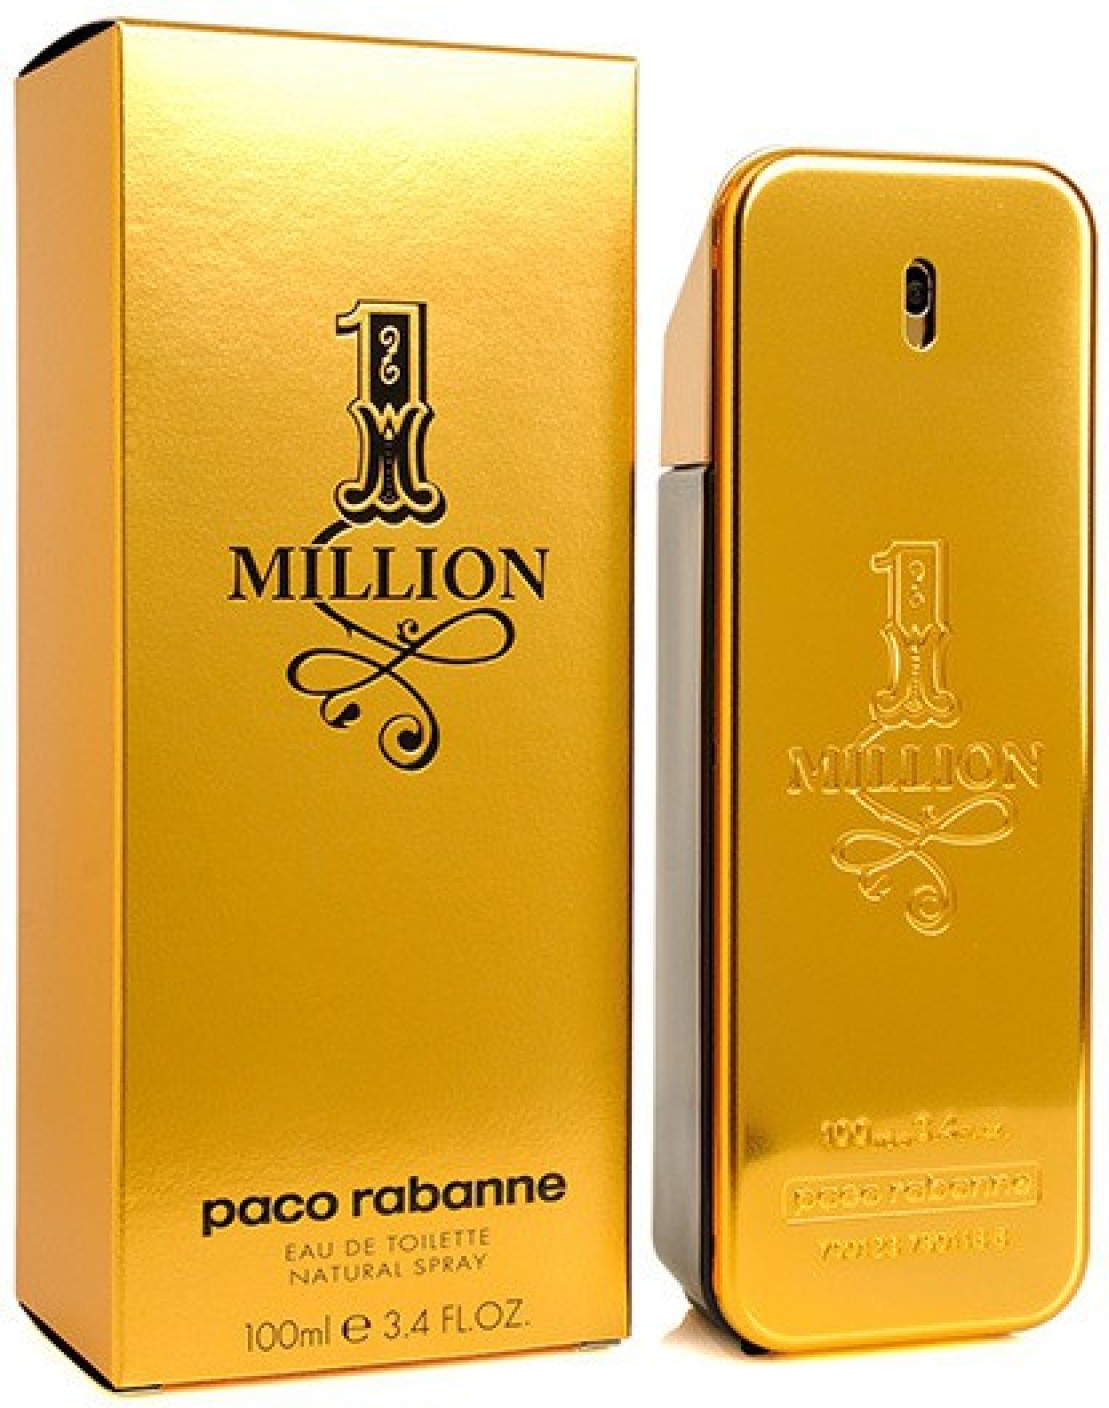 1 one-million-eau-de-toilette-paco-rabanne-original kutu şişe parfüm.jpeg